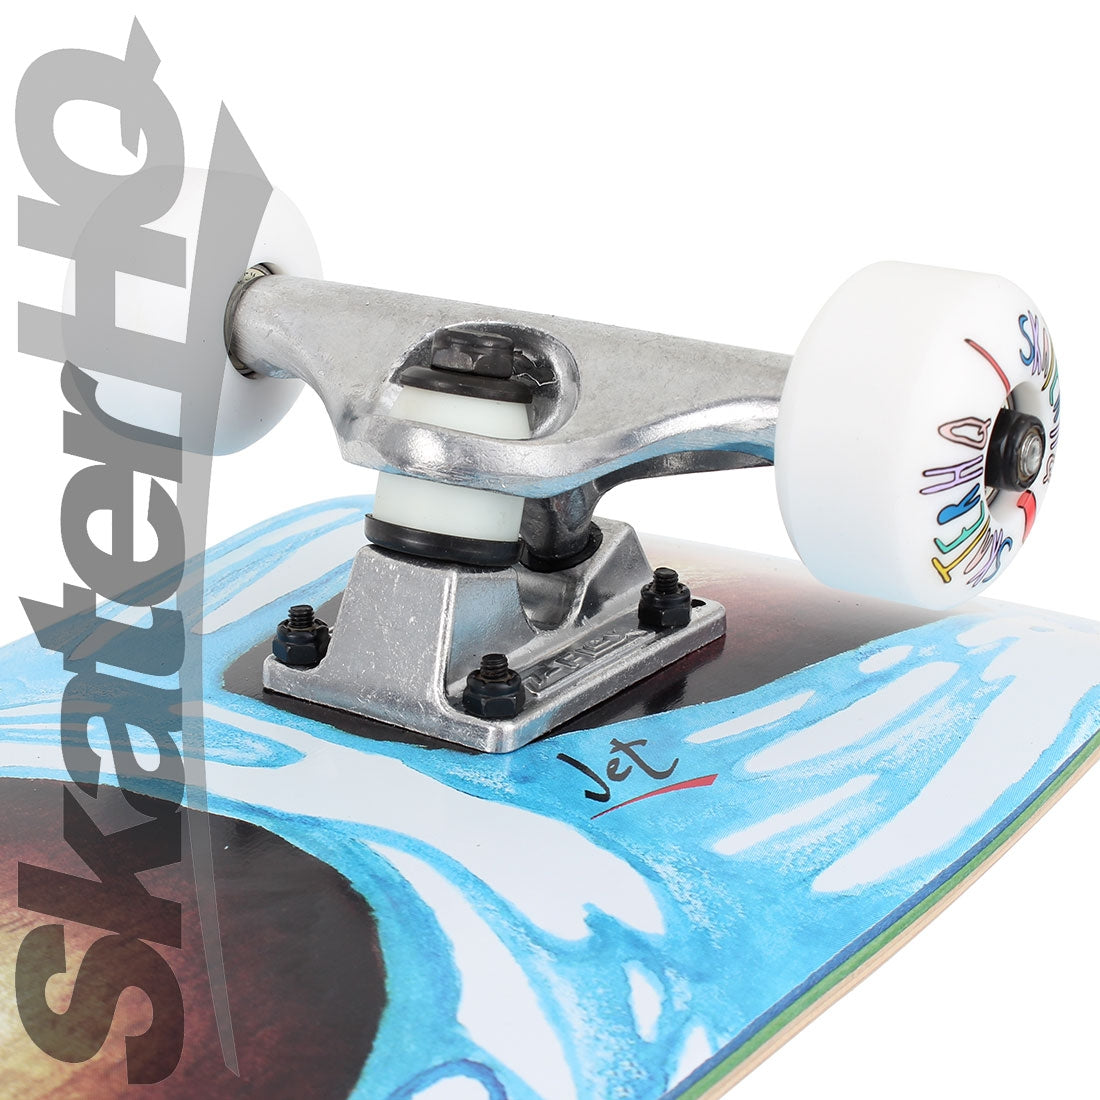 Skater HQ Platypus 7.25 Mini S Complete Skateboard Completes Modern Street